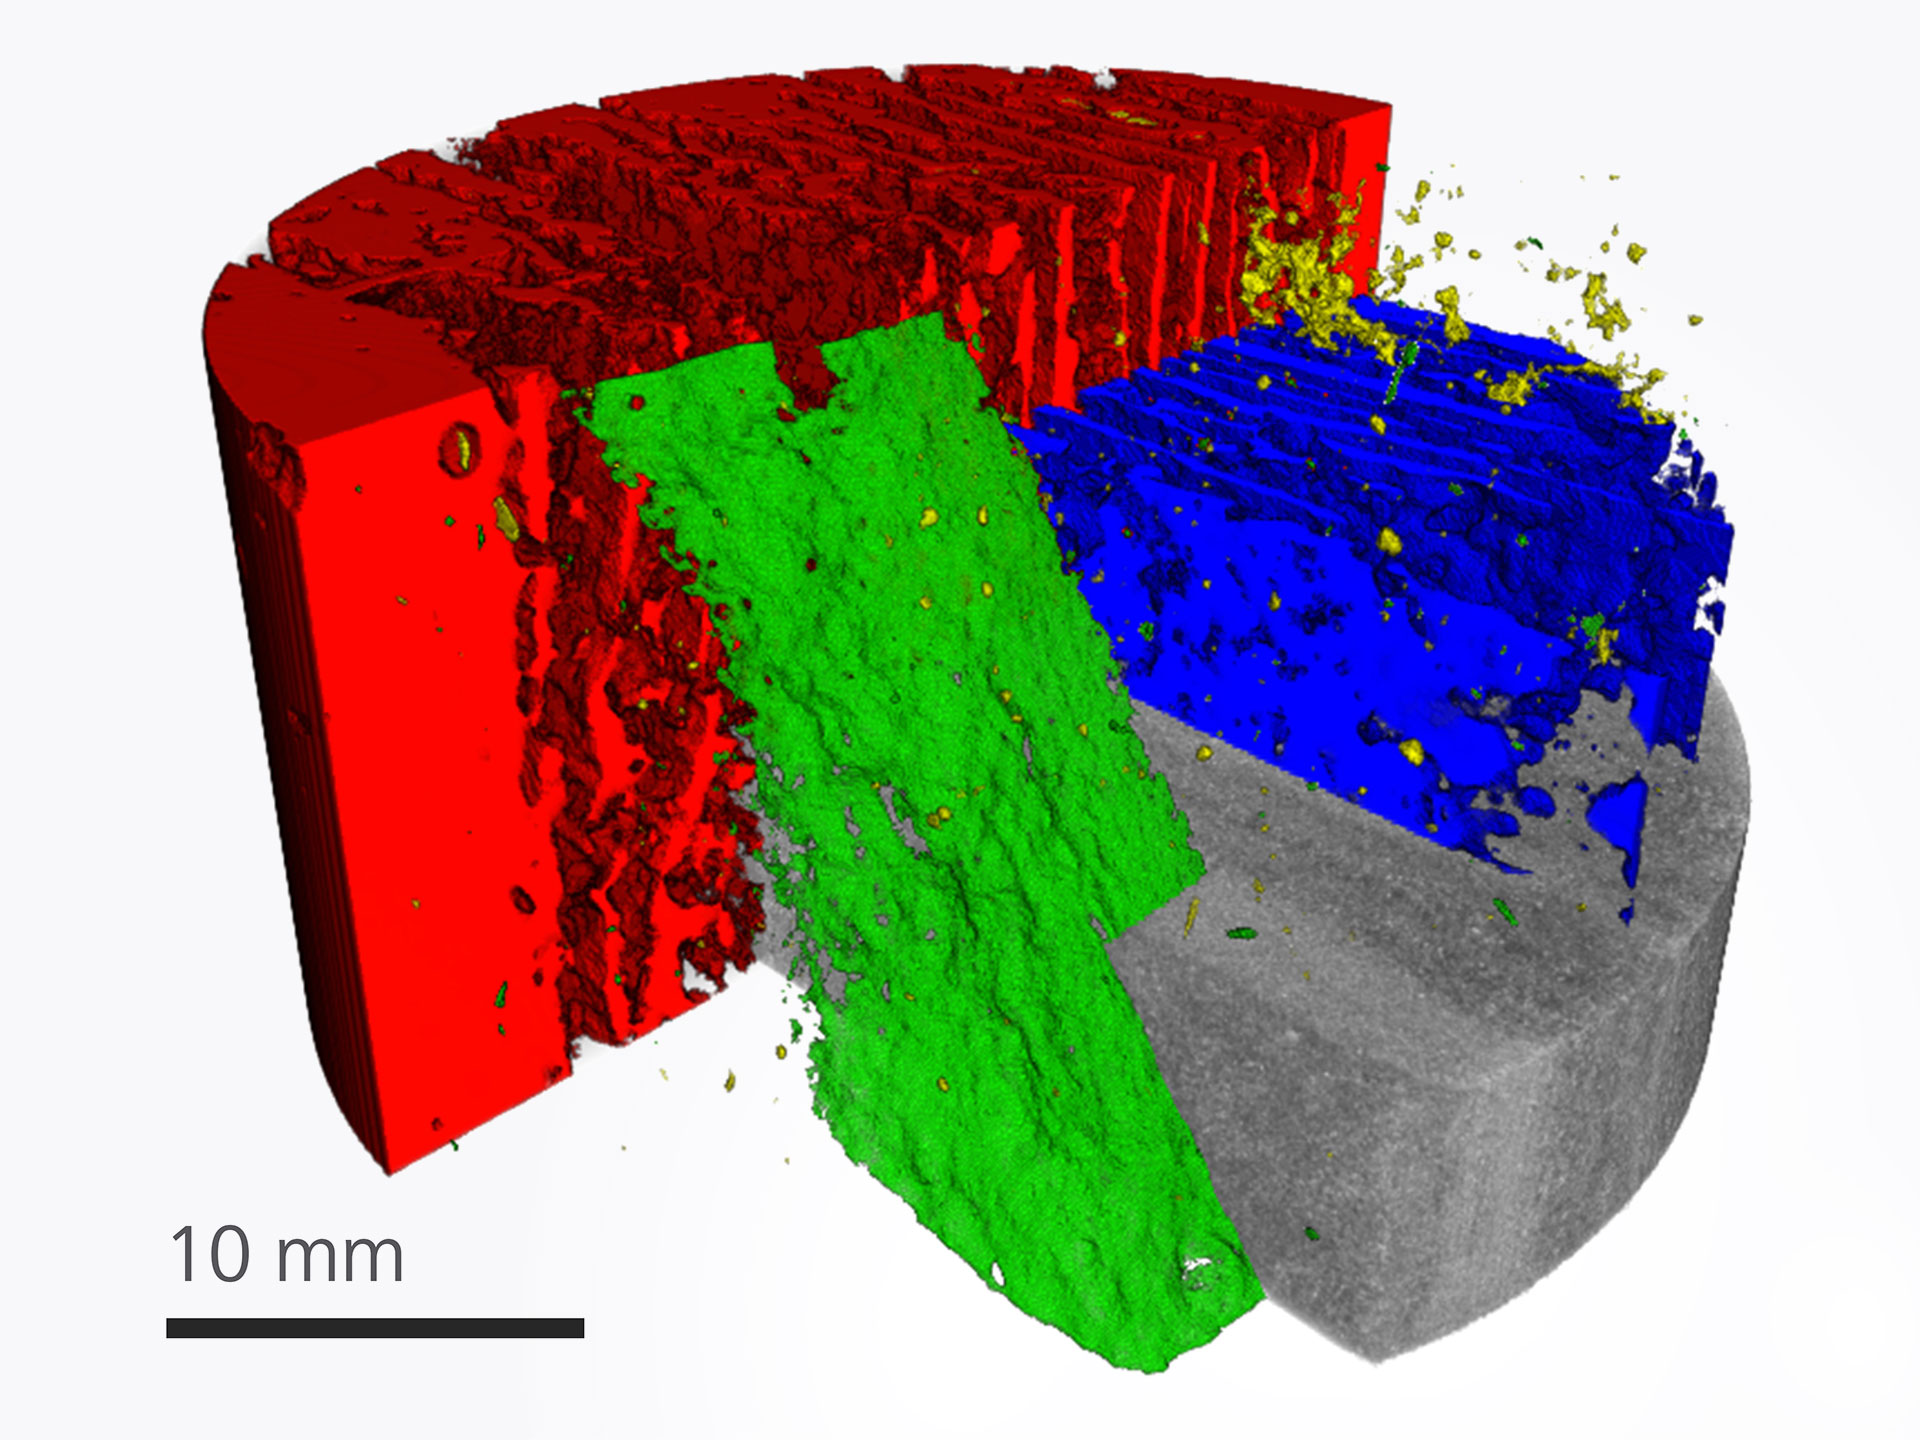 Classification of shale heterogeneity imaged by ZEISS Xradia Versa X-ray microscope